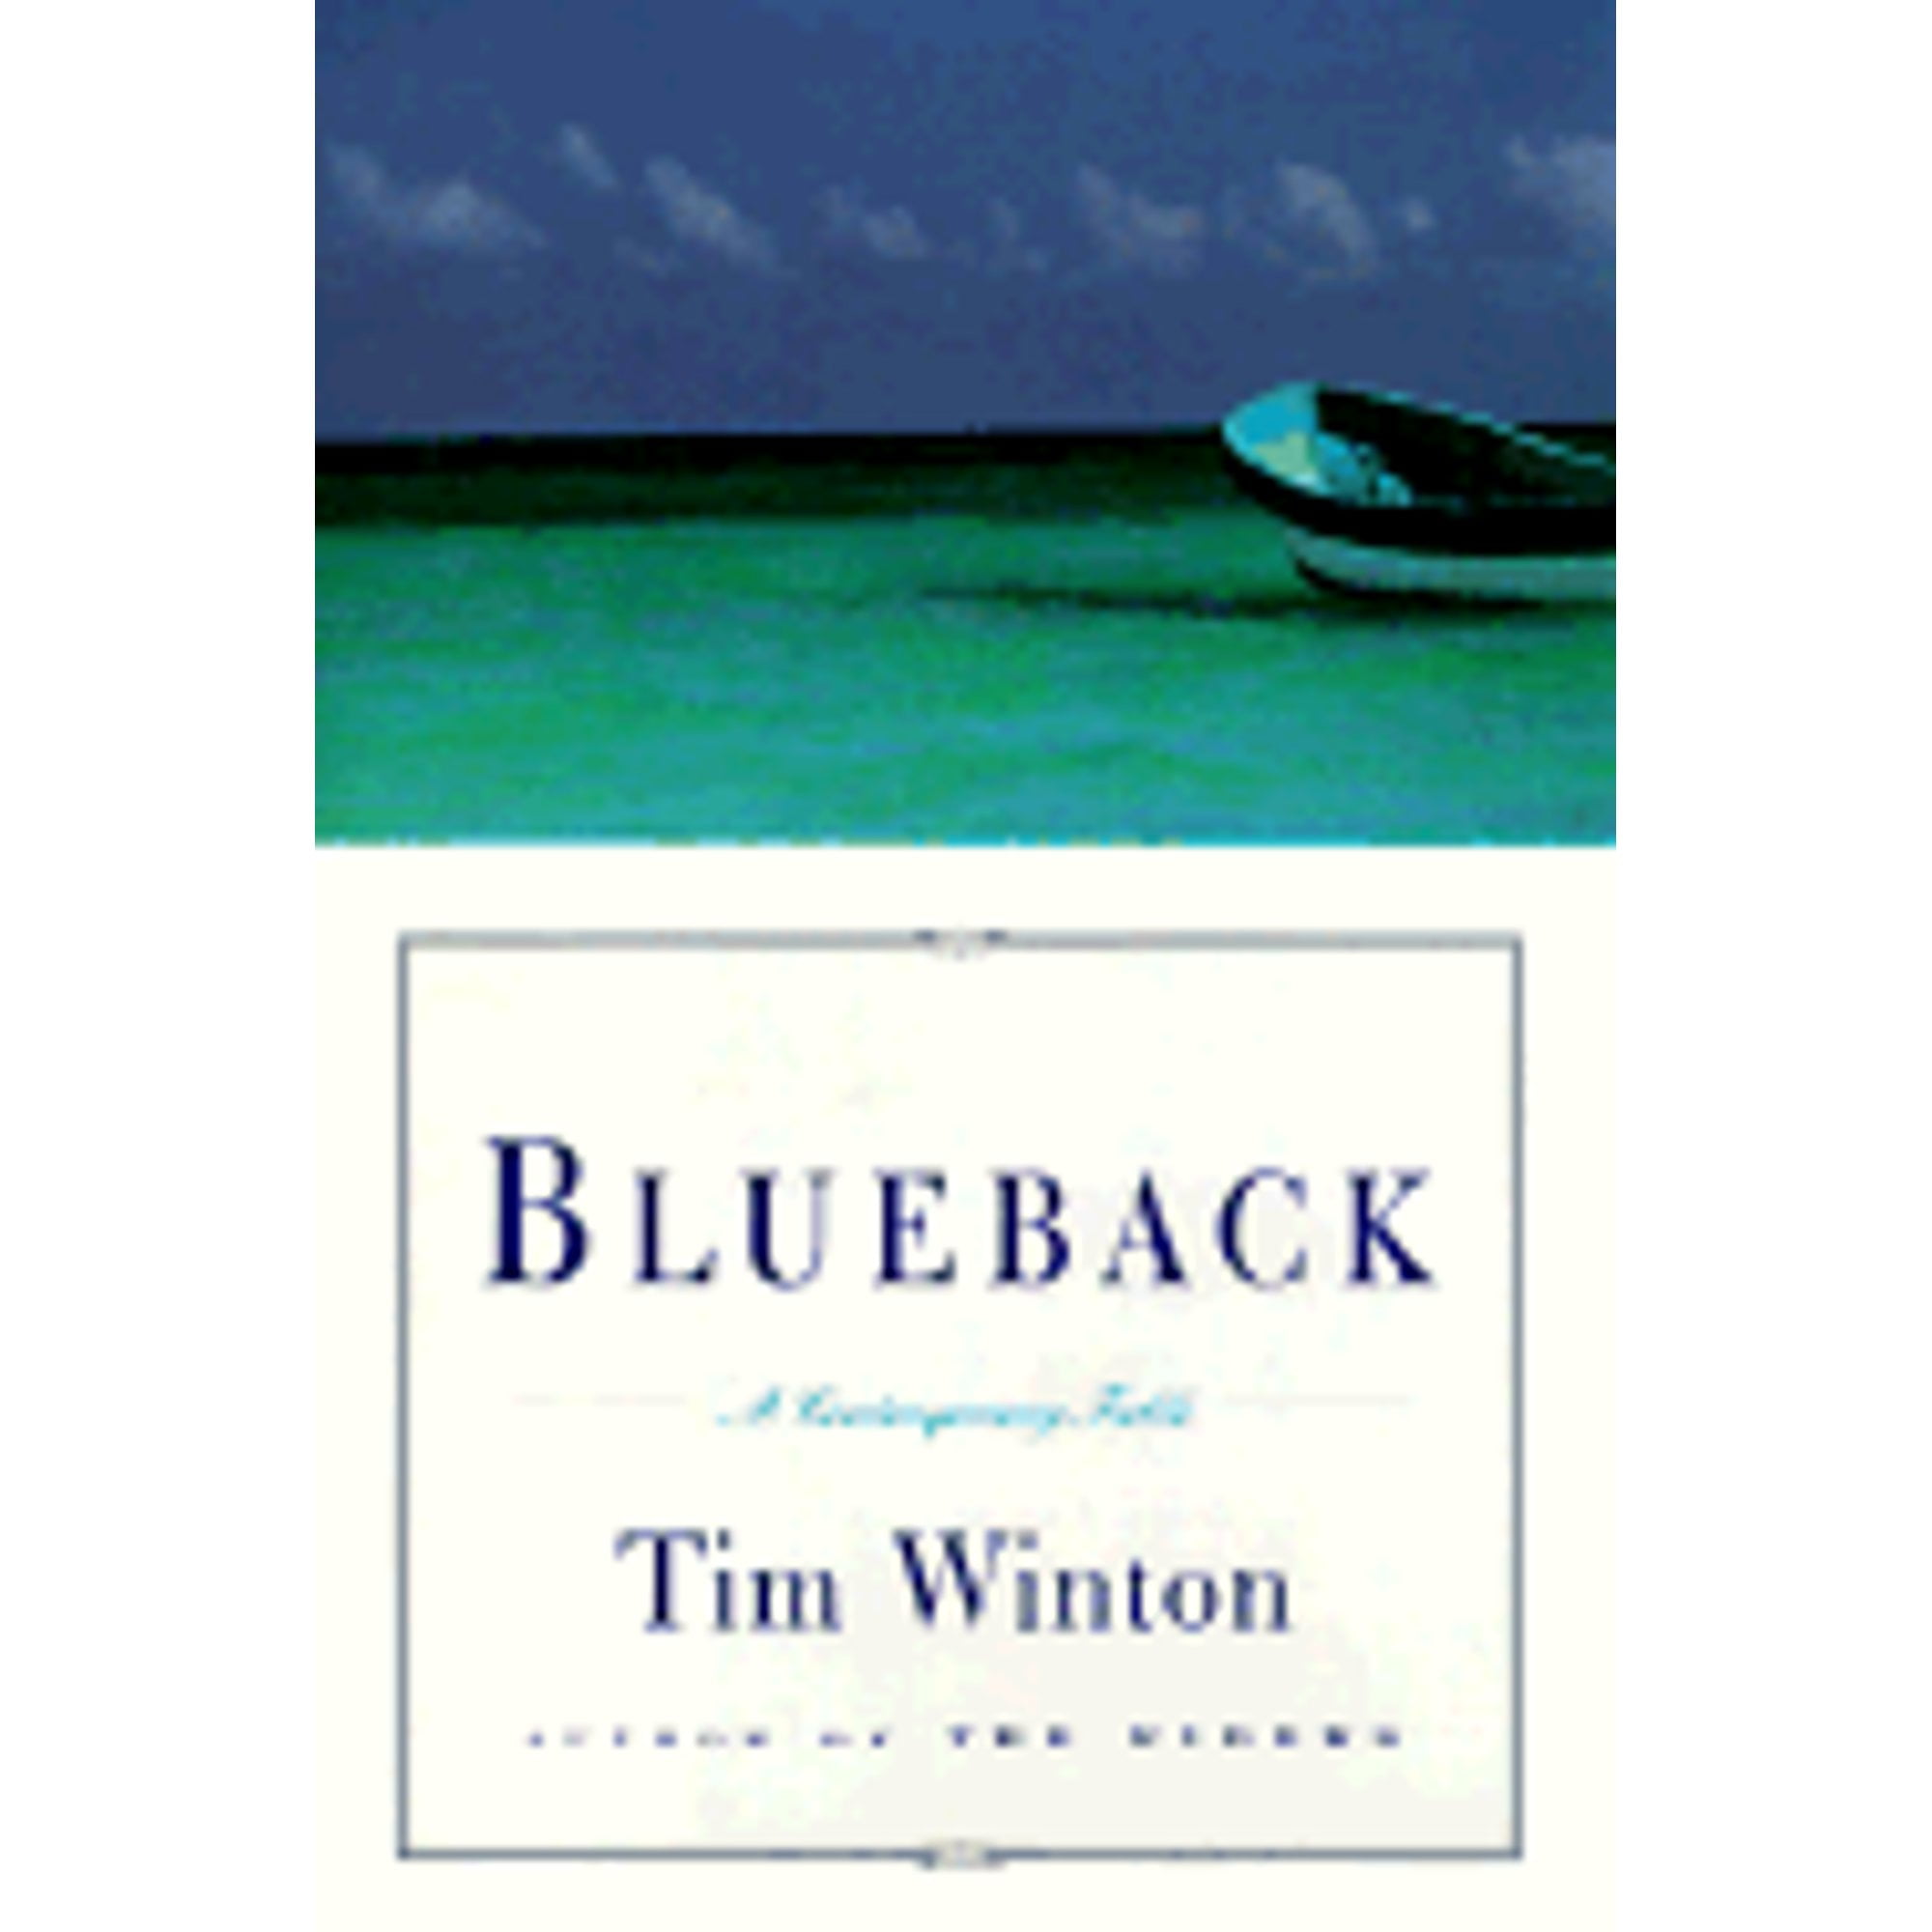 blueback tim winton